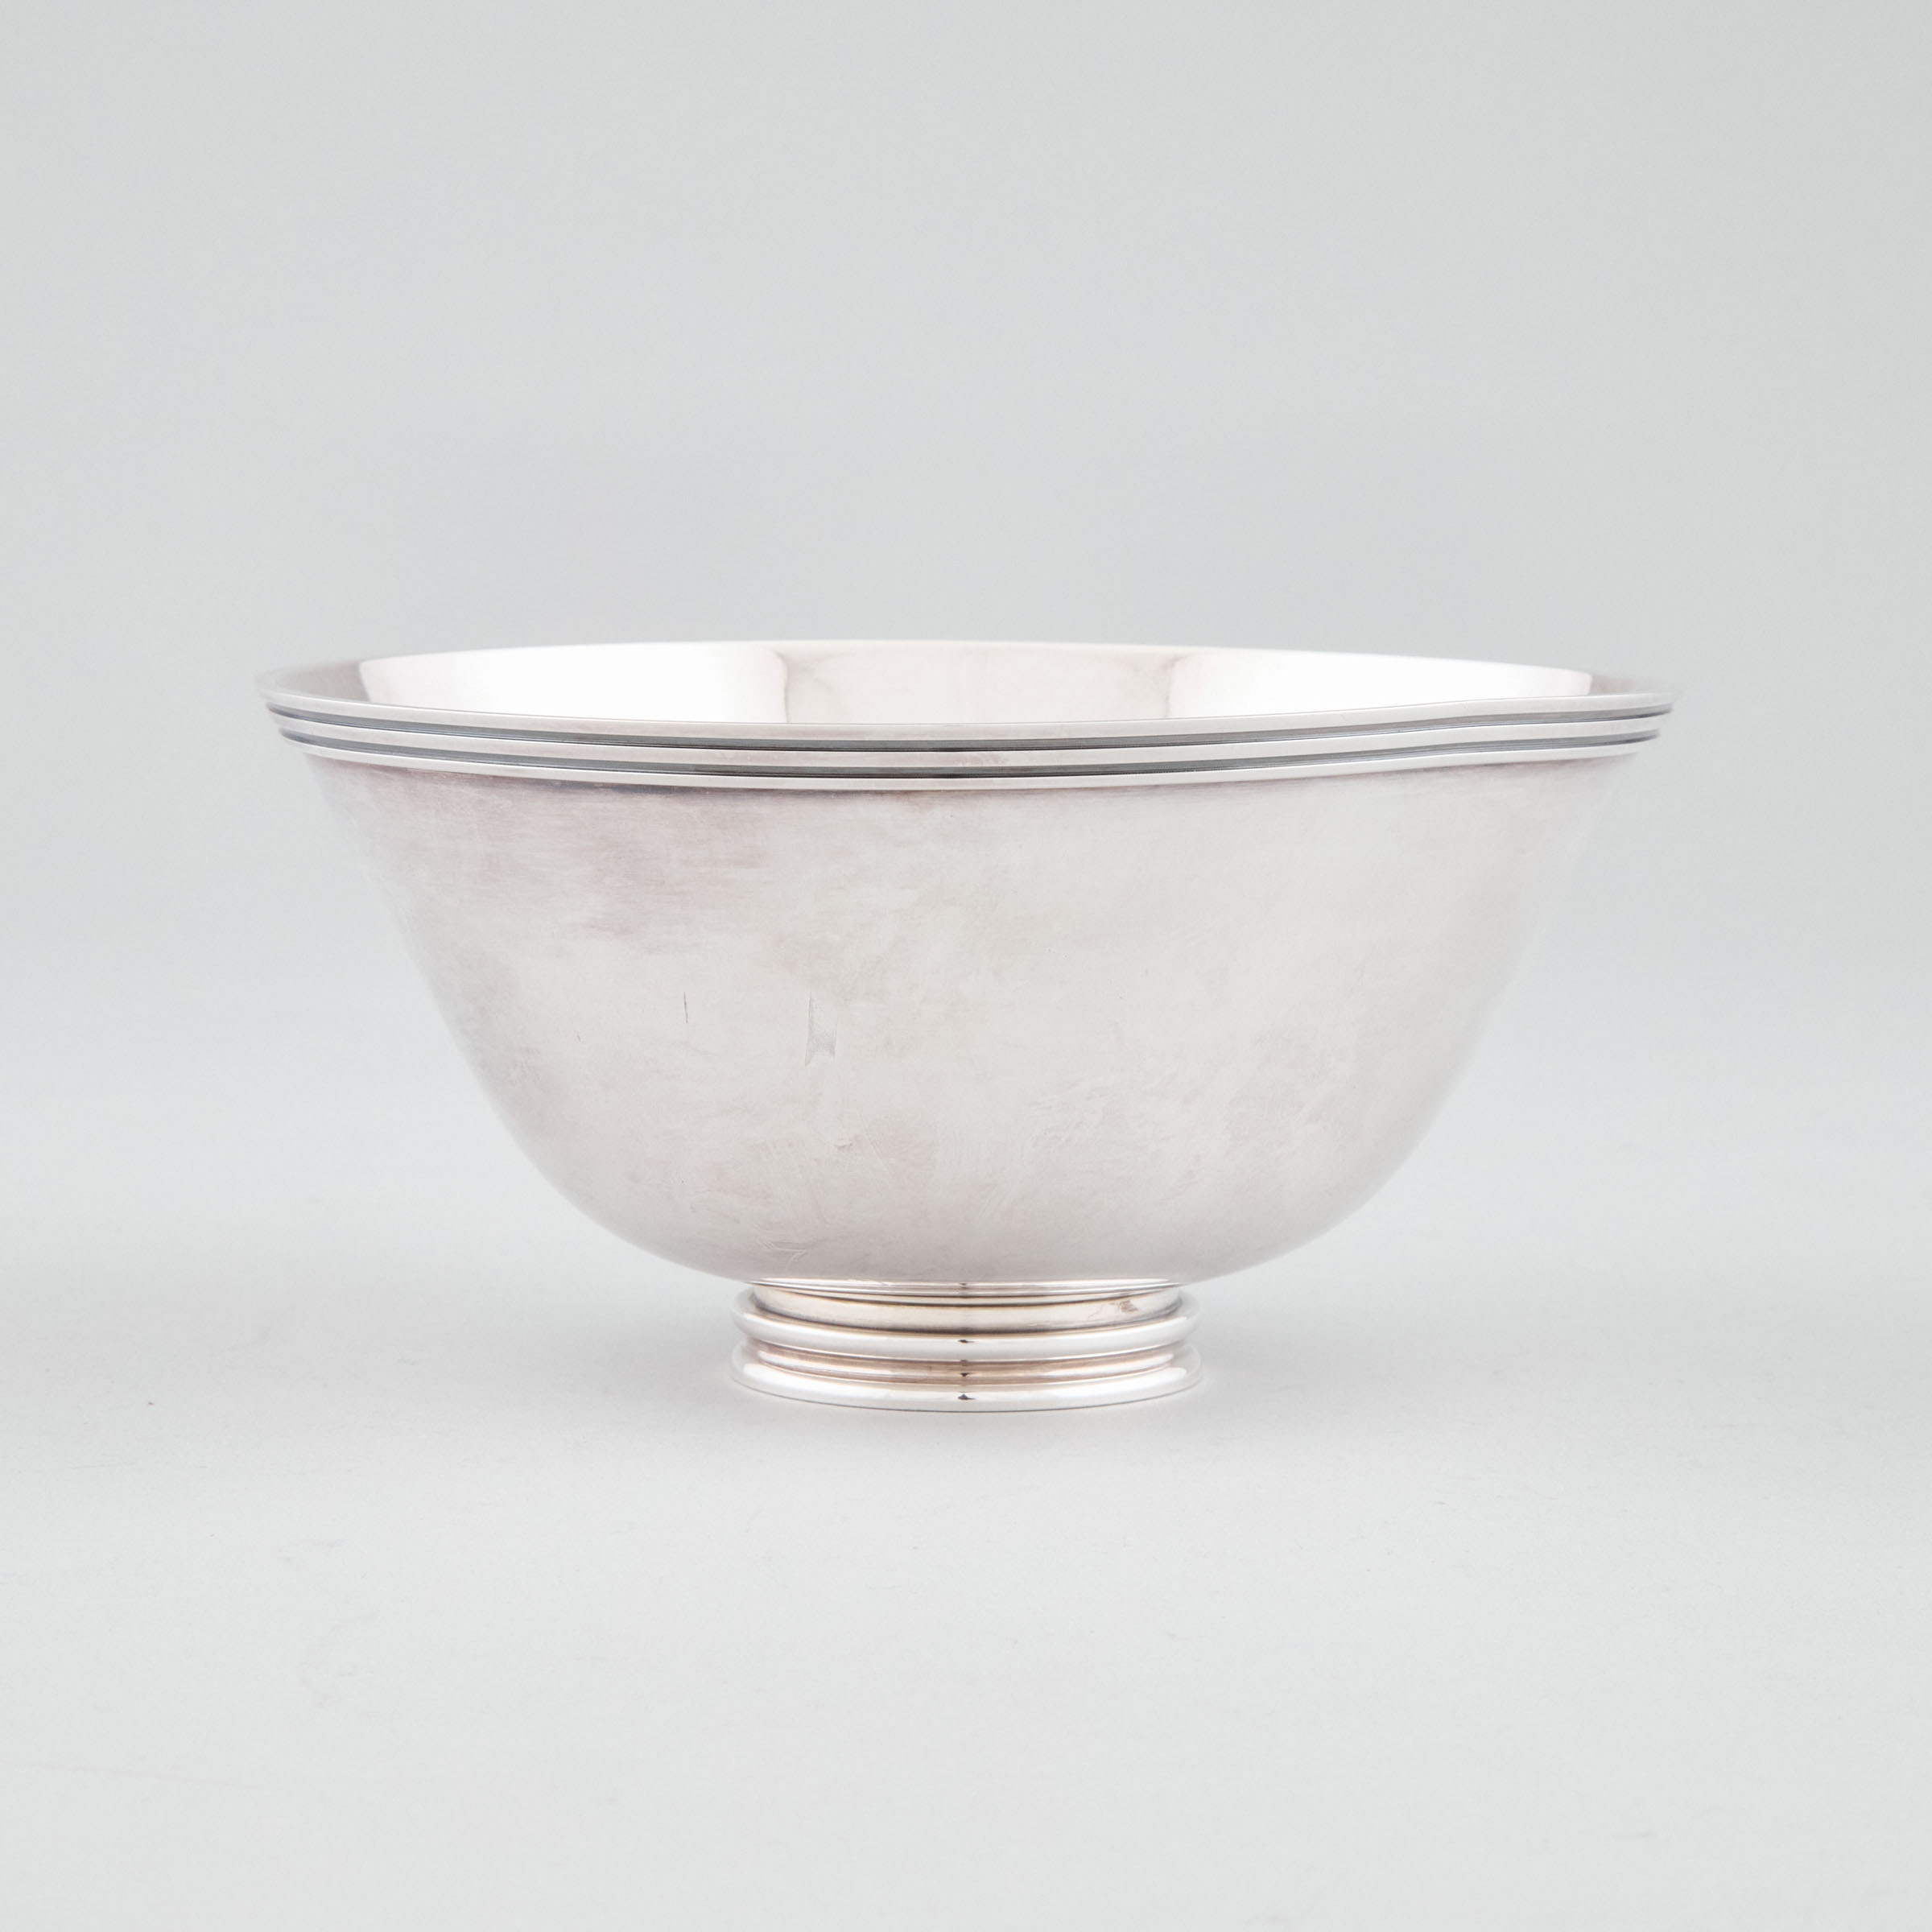 Danish Silver Bowl, #853, Jørgen